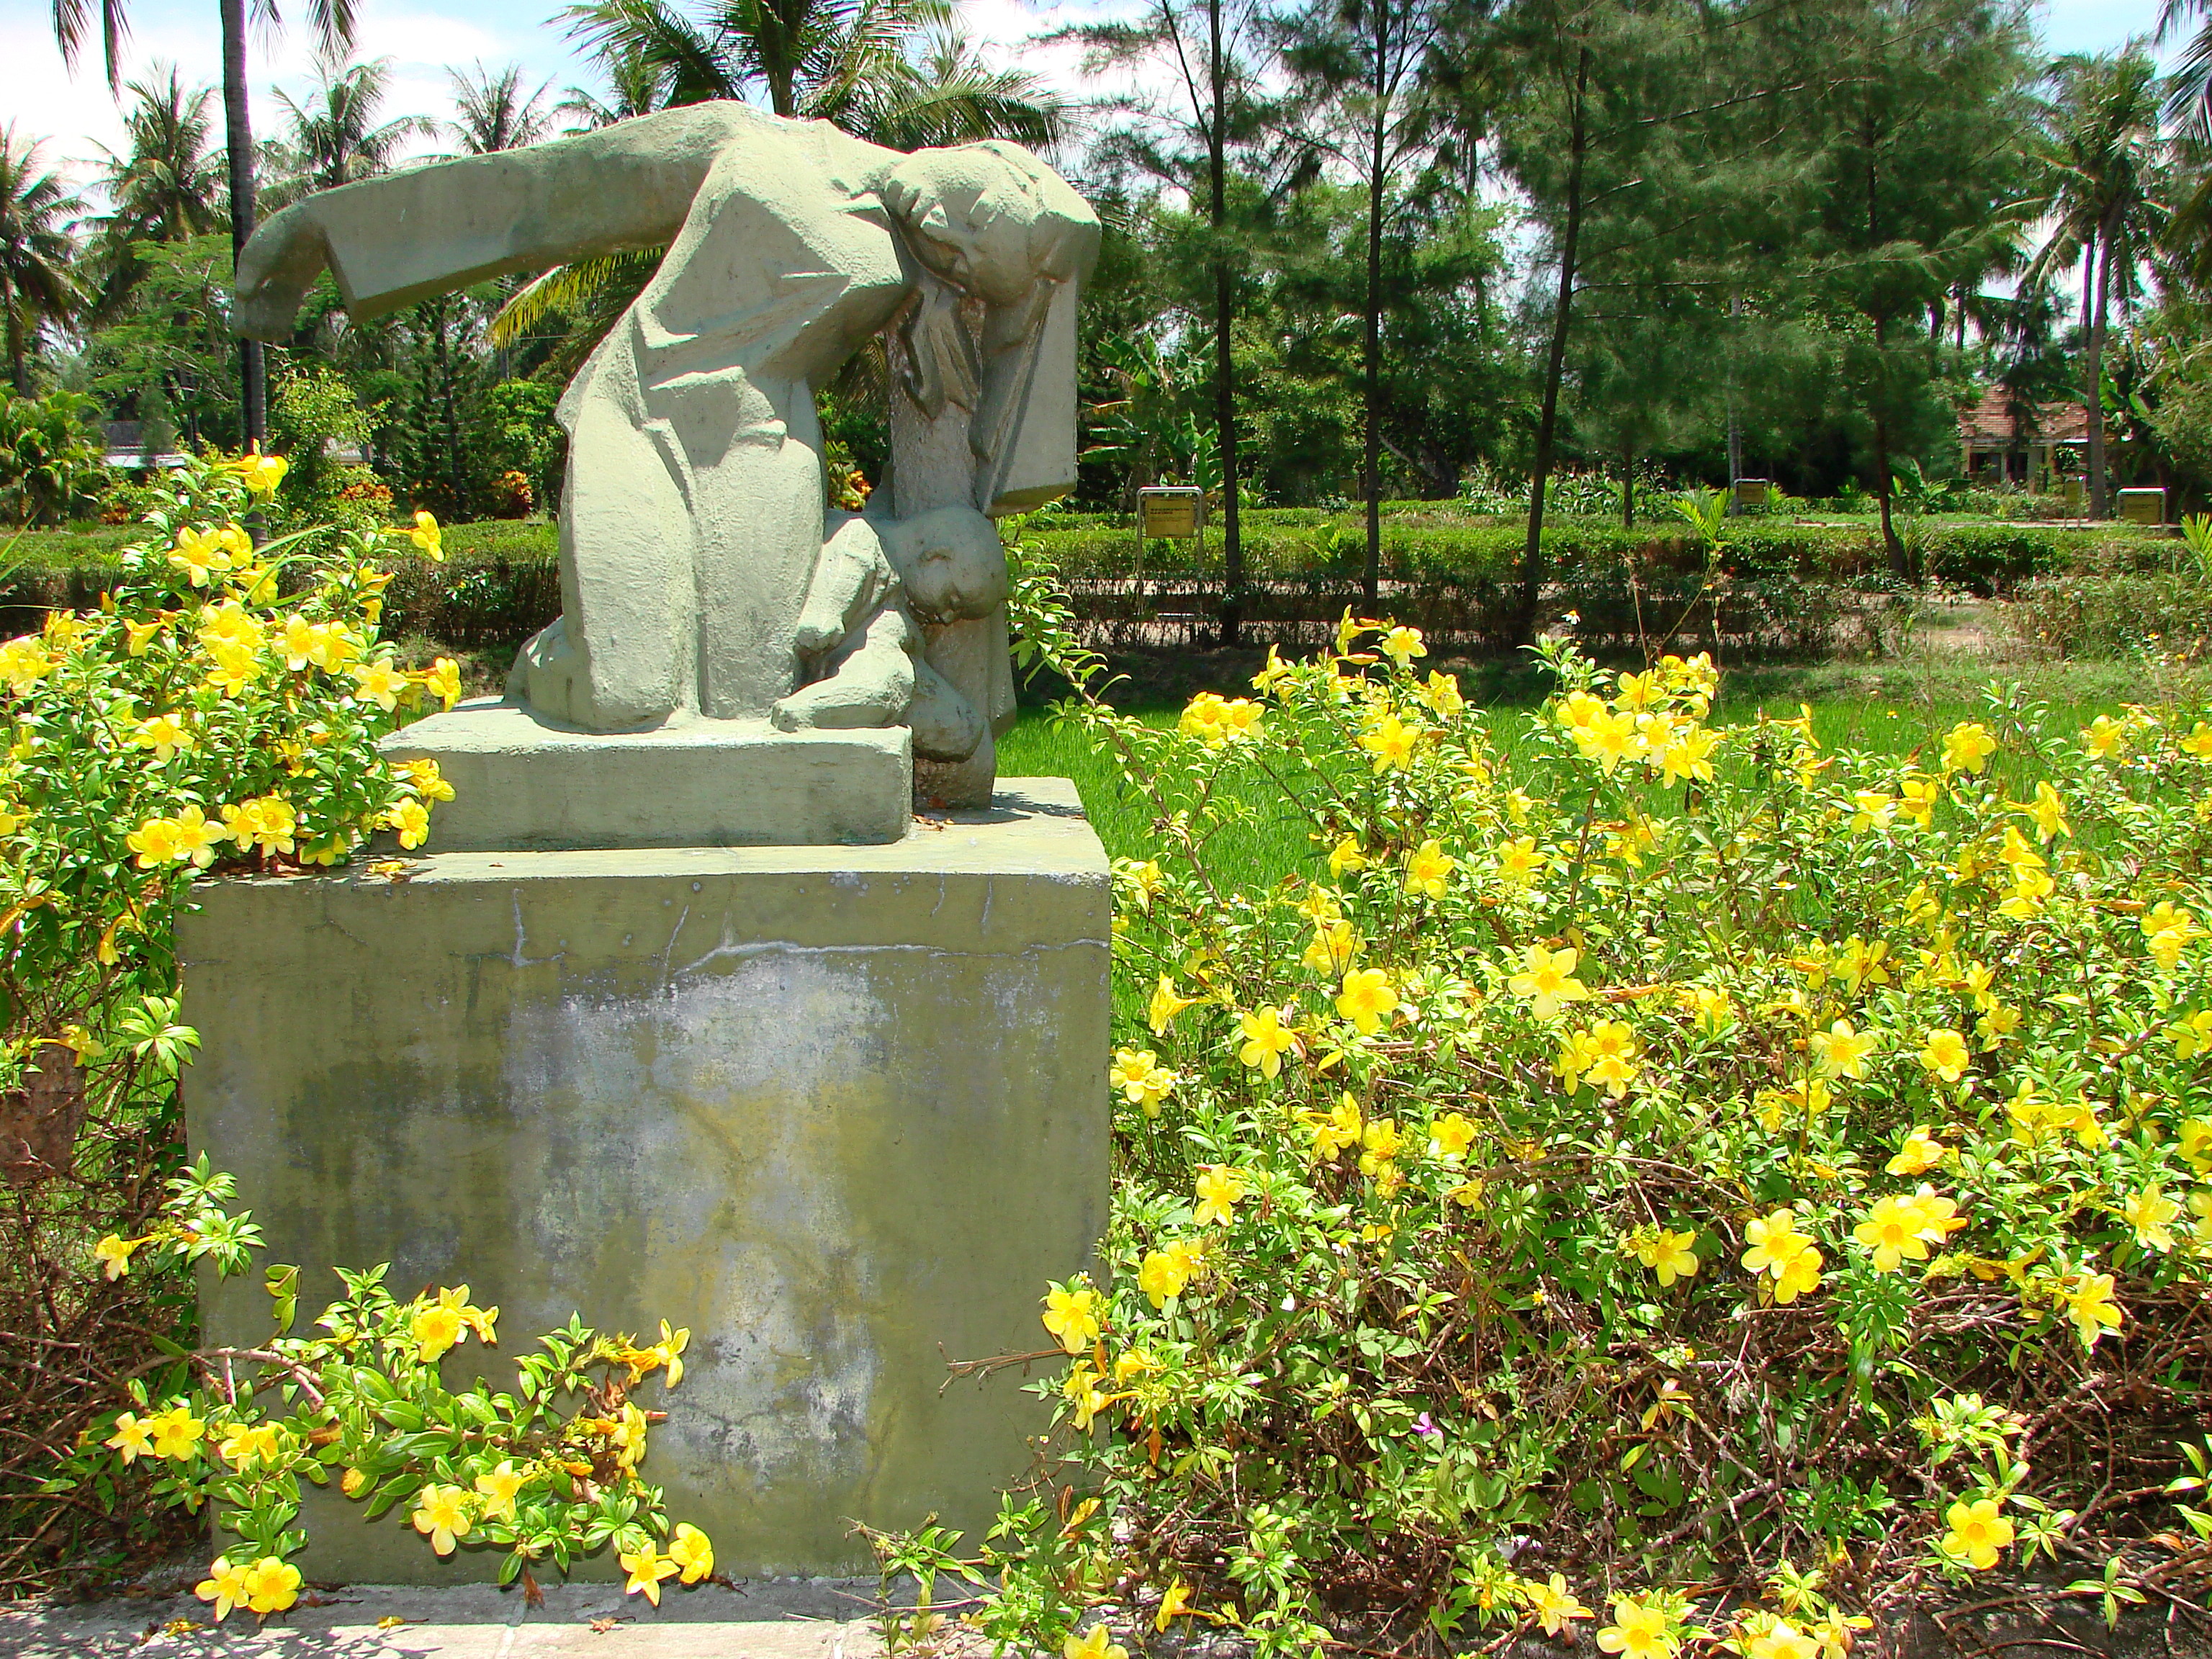 File:My Lai Memorial Site - Vietnam - Garden Statuary 2.JPG - Wikimedia Commons